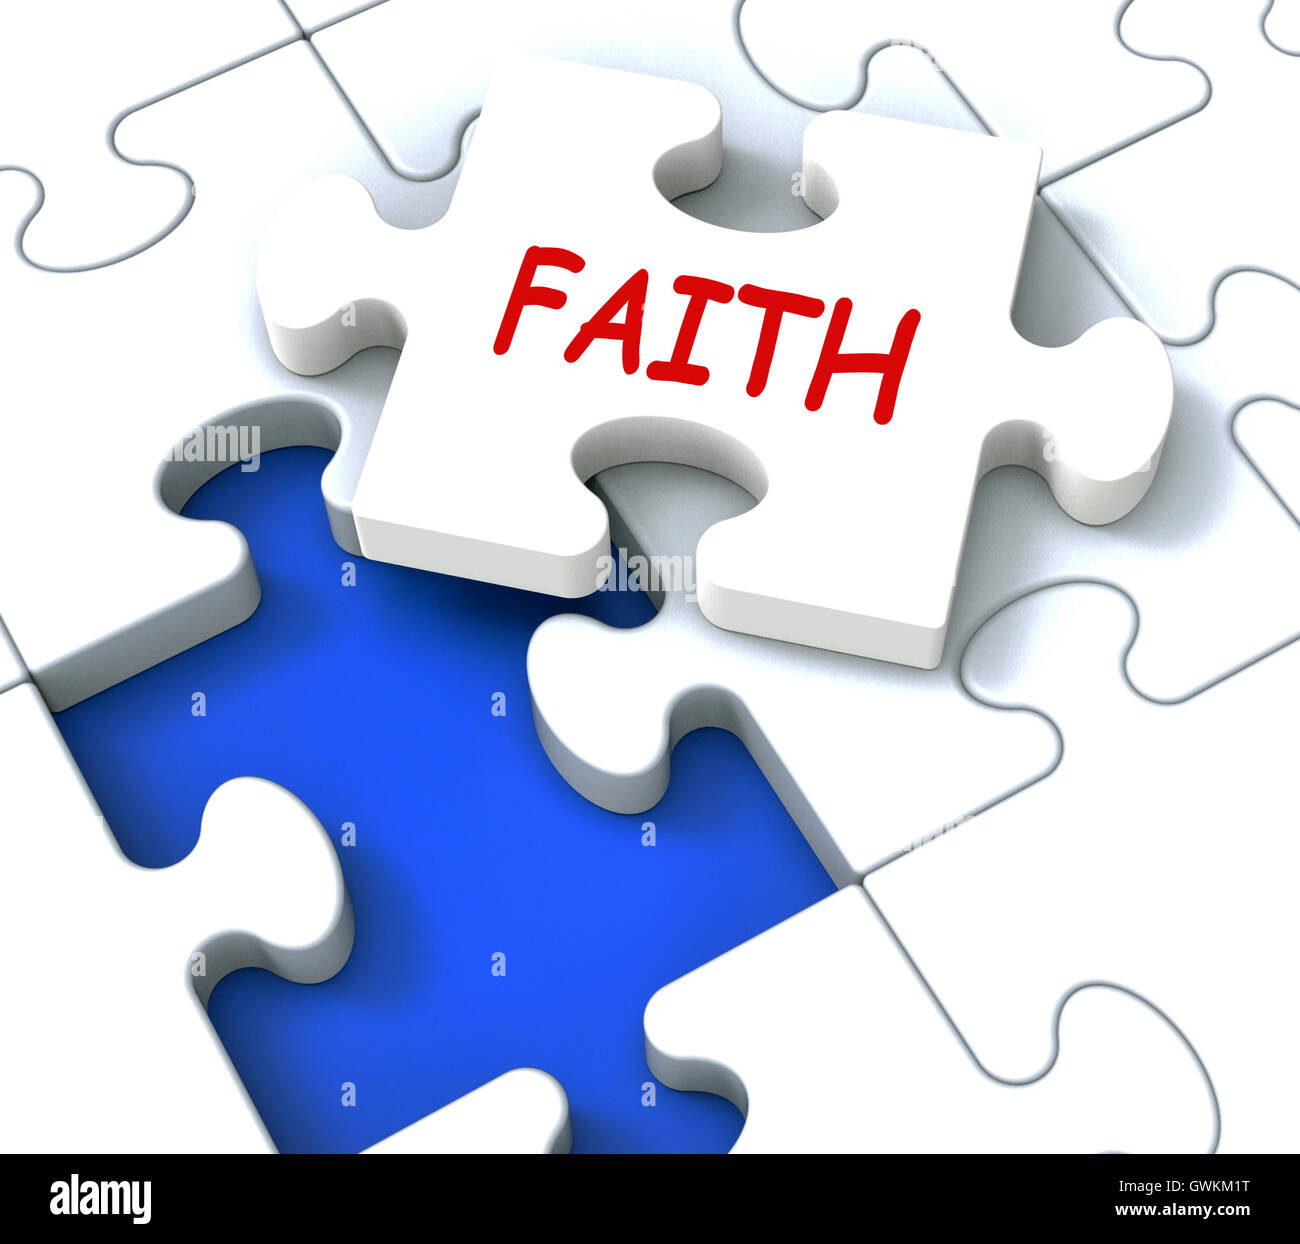 Faith Jigsaw Showing Religious Spiritual Belief Or Trust Stock Photo